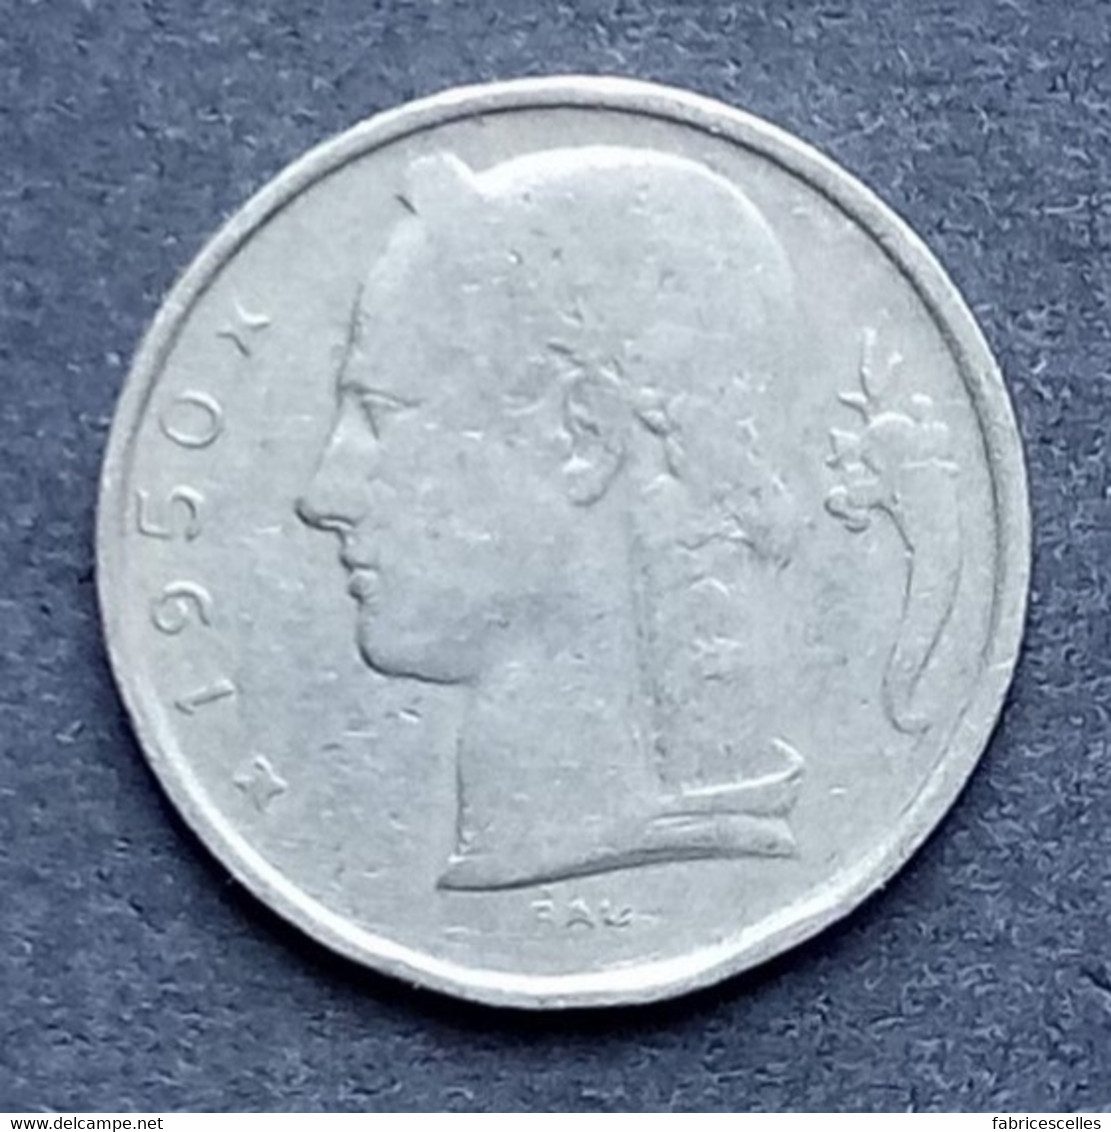 Belgique - 5 Francs 1950 "België" - 5 Franc